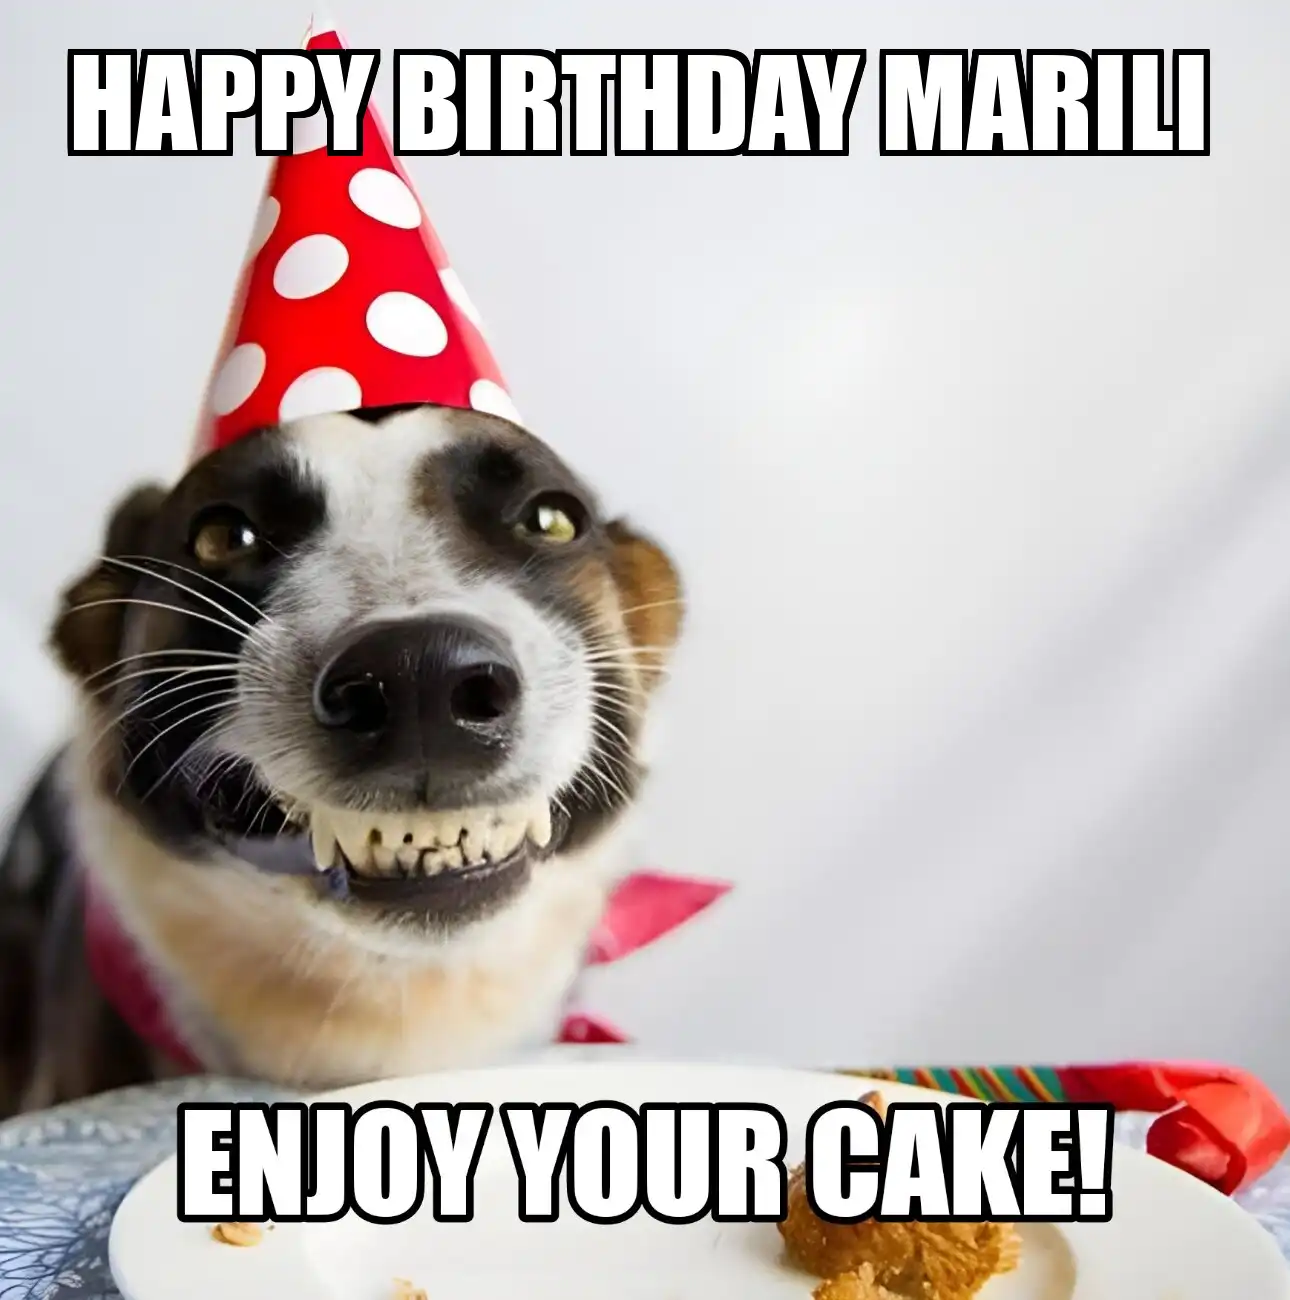 Happy Birthday Marili Enjoy Your Cake Dog Meme